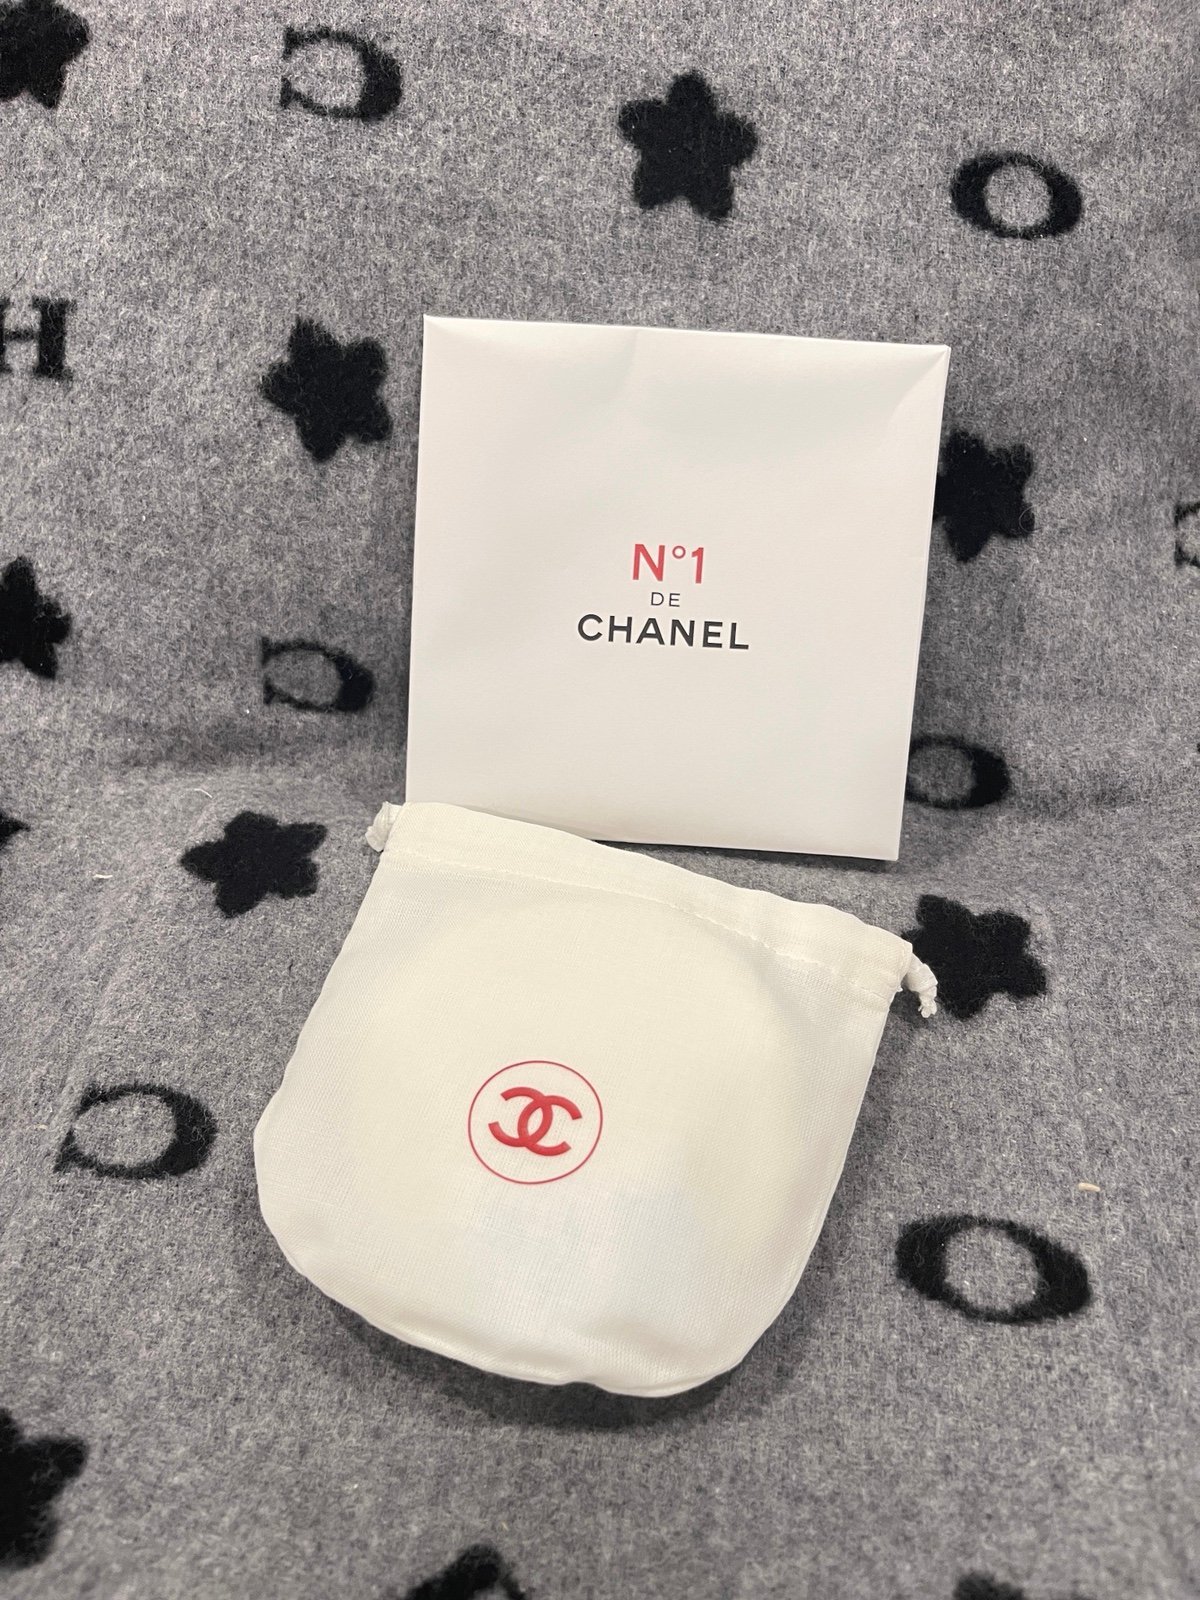 Chanel N1 set of 3 washable cotton pads itcFxBm8V